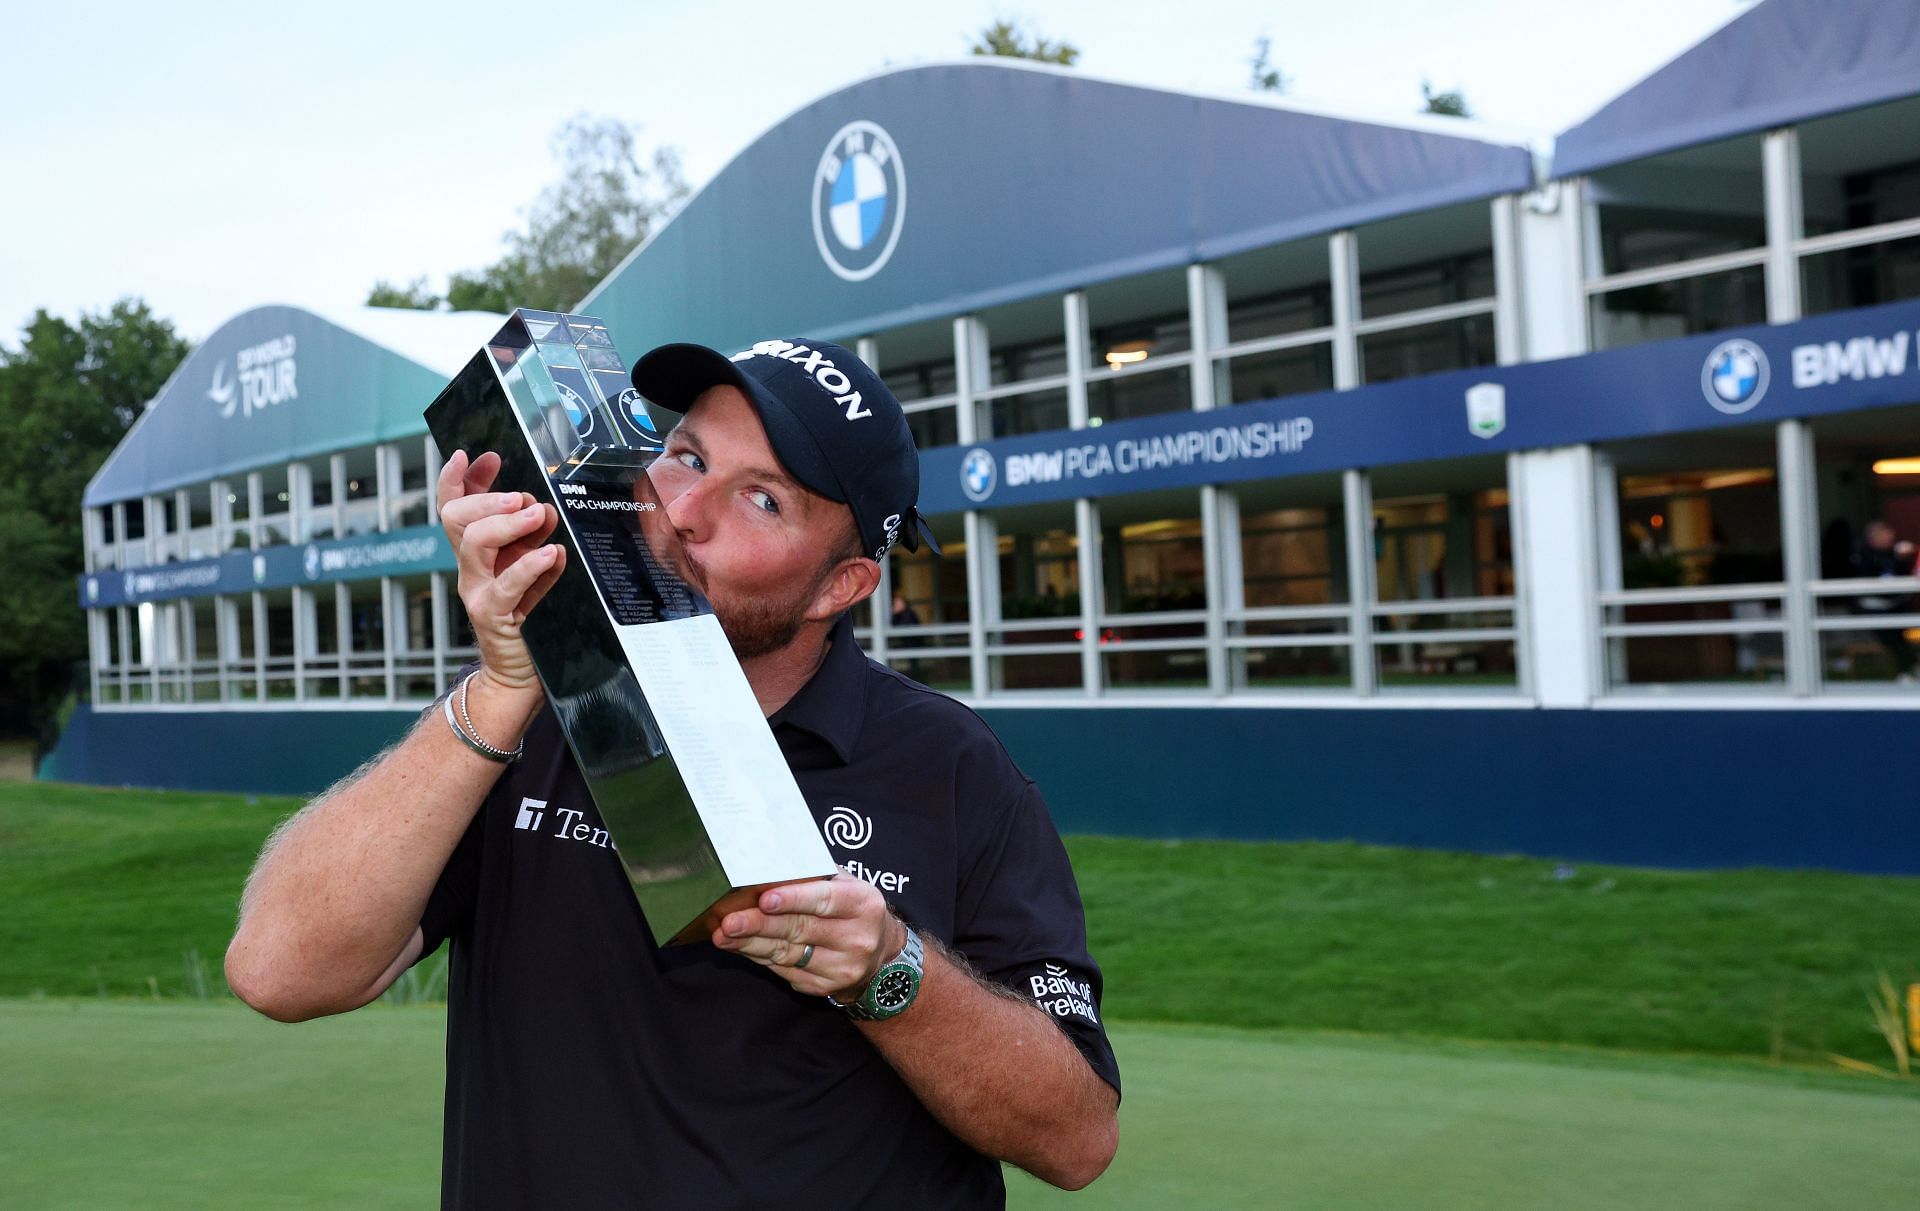 Shane Lowry win at the BMW PGA Championship